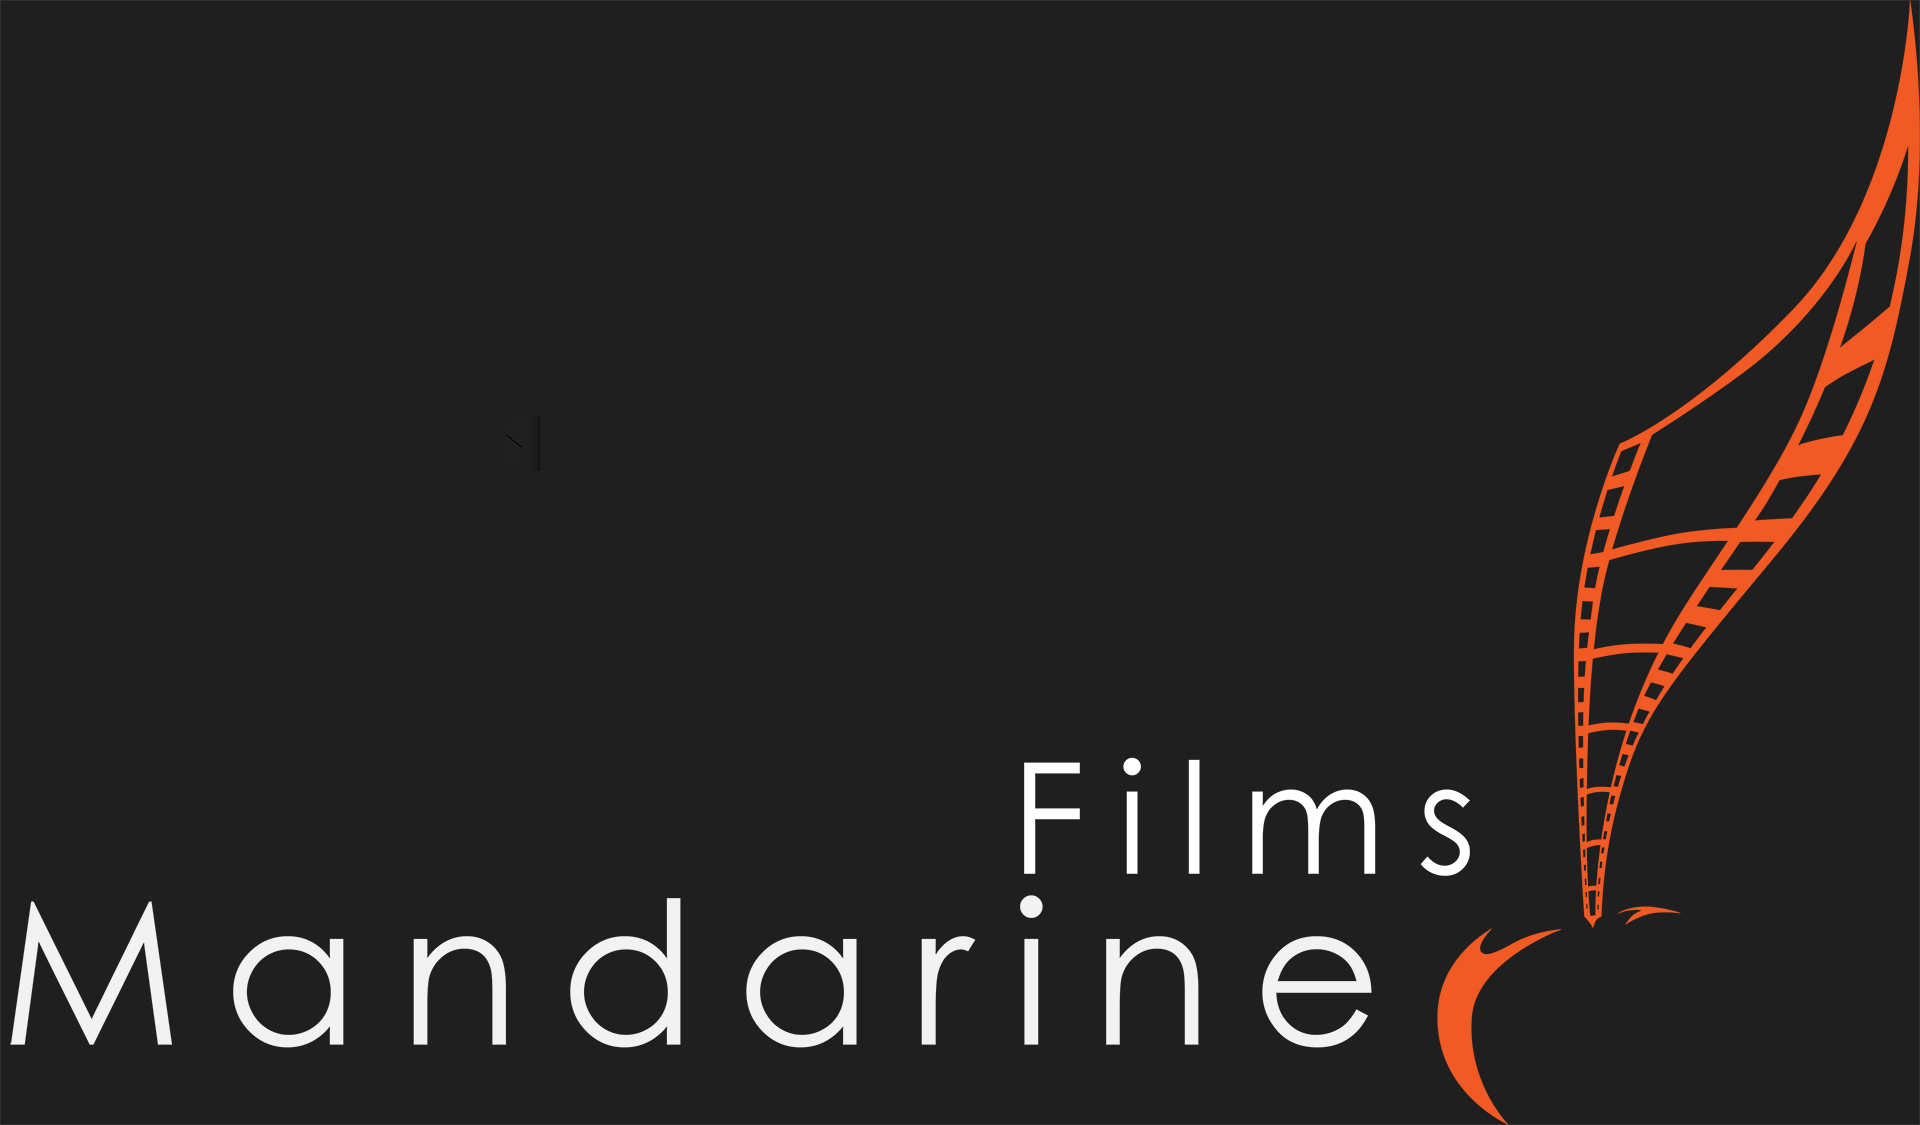 Mandarine Films